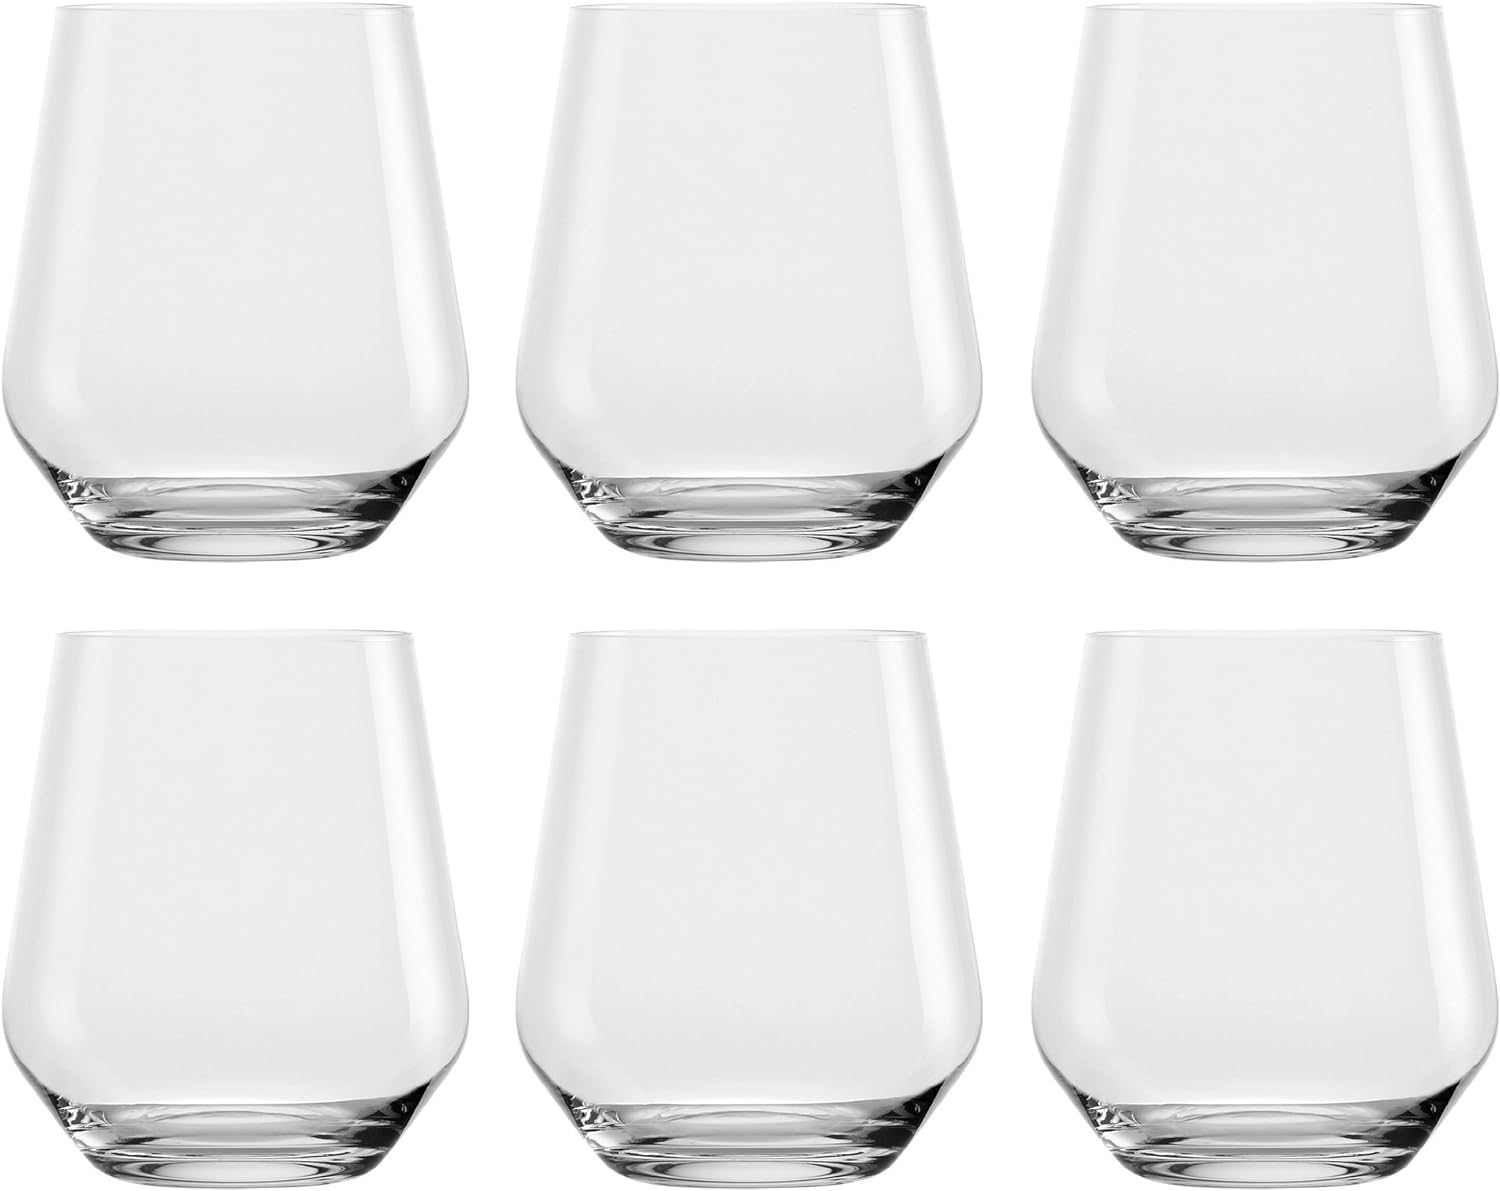 Stölzle Lausitz 358 00 16, Whiskey Glasses 470ml, Set of 6 – Premium Quality